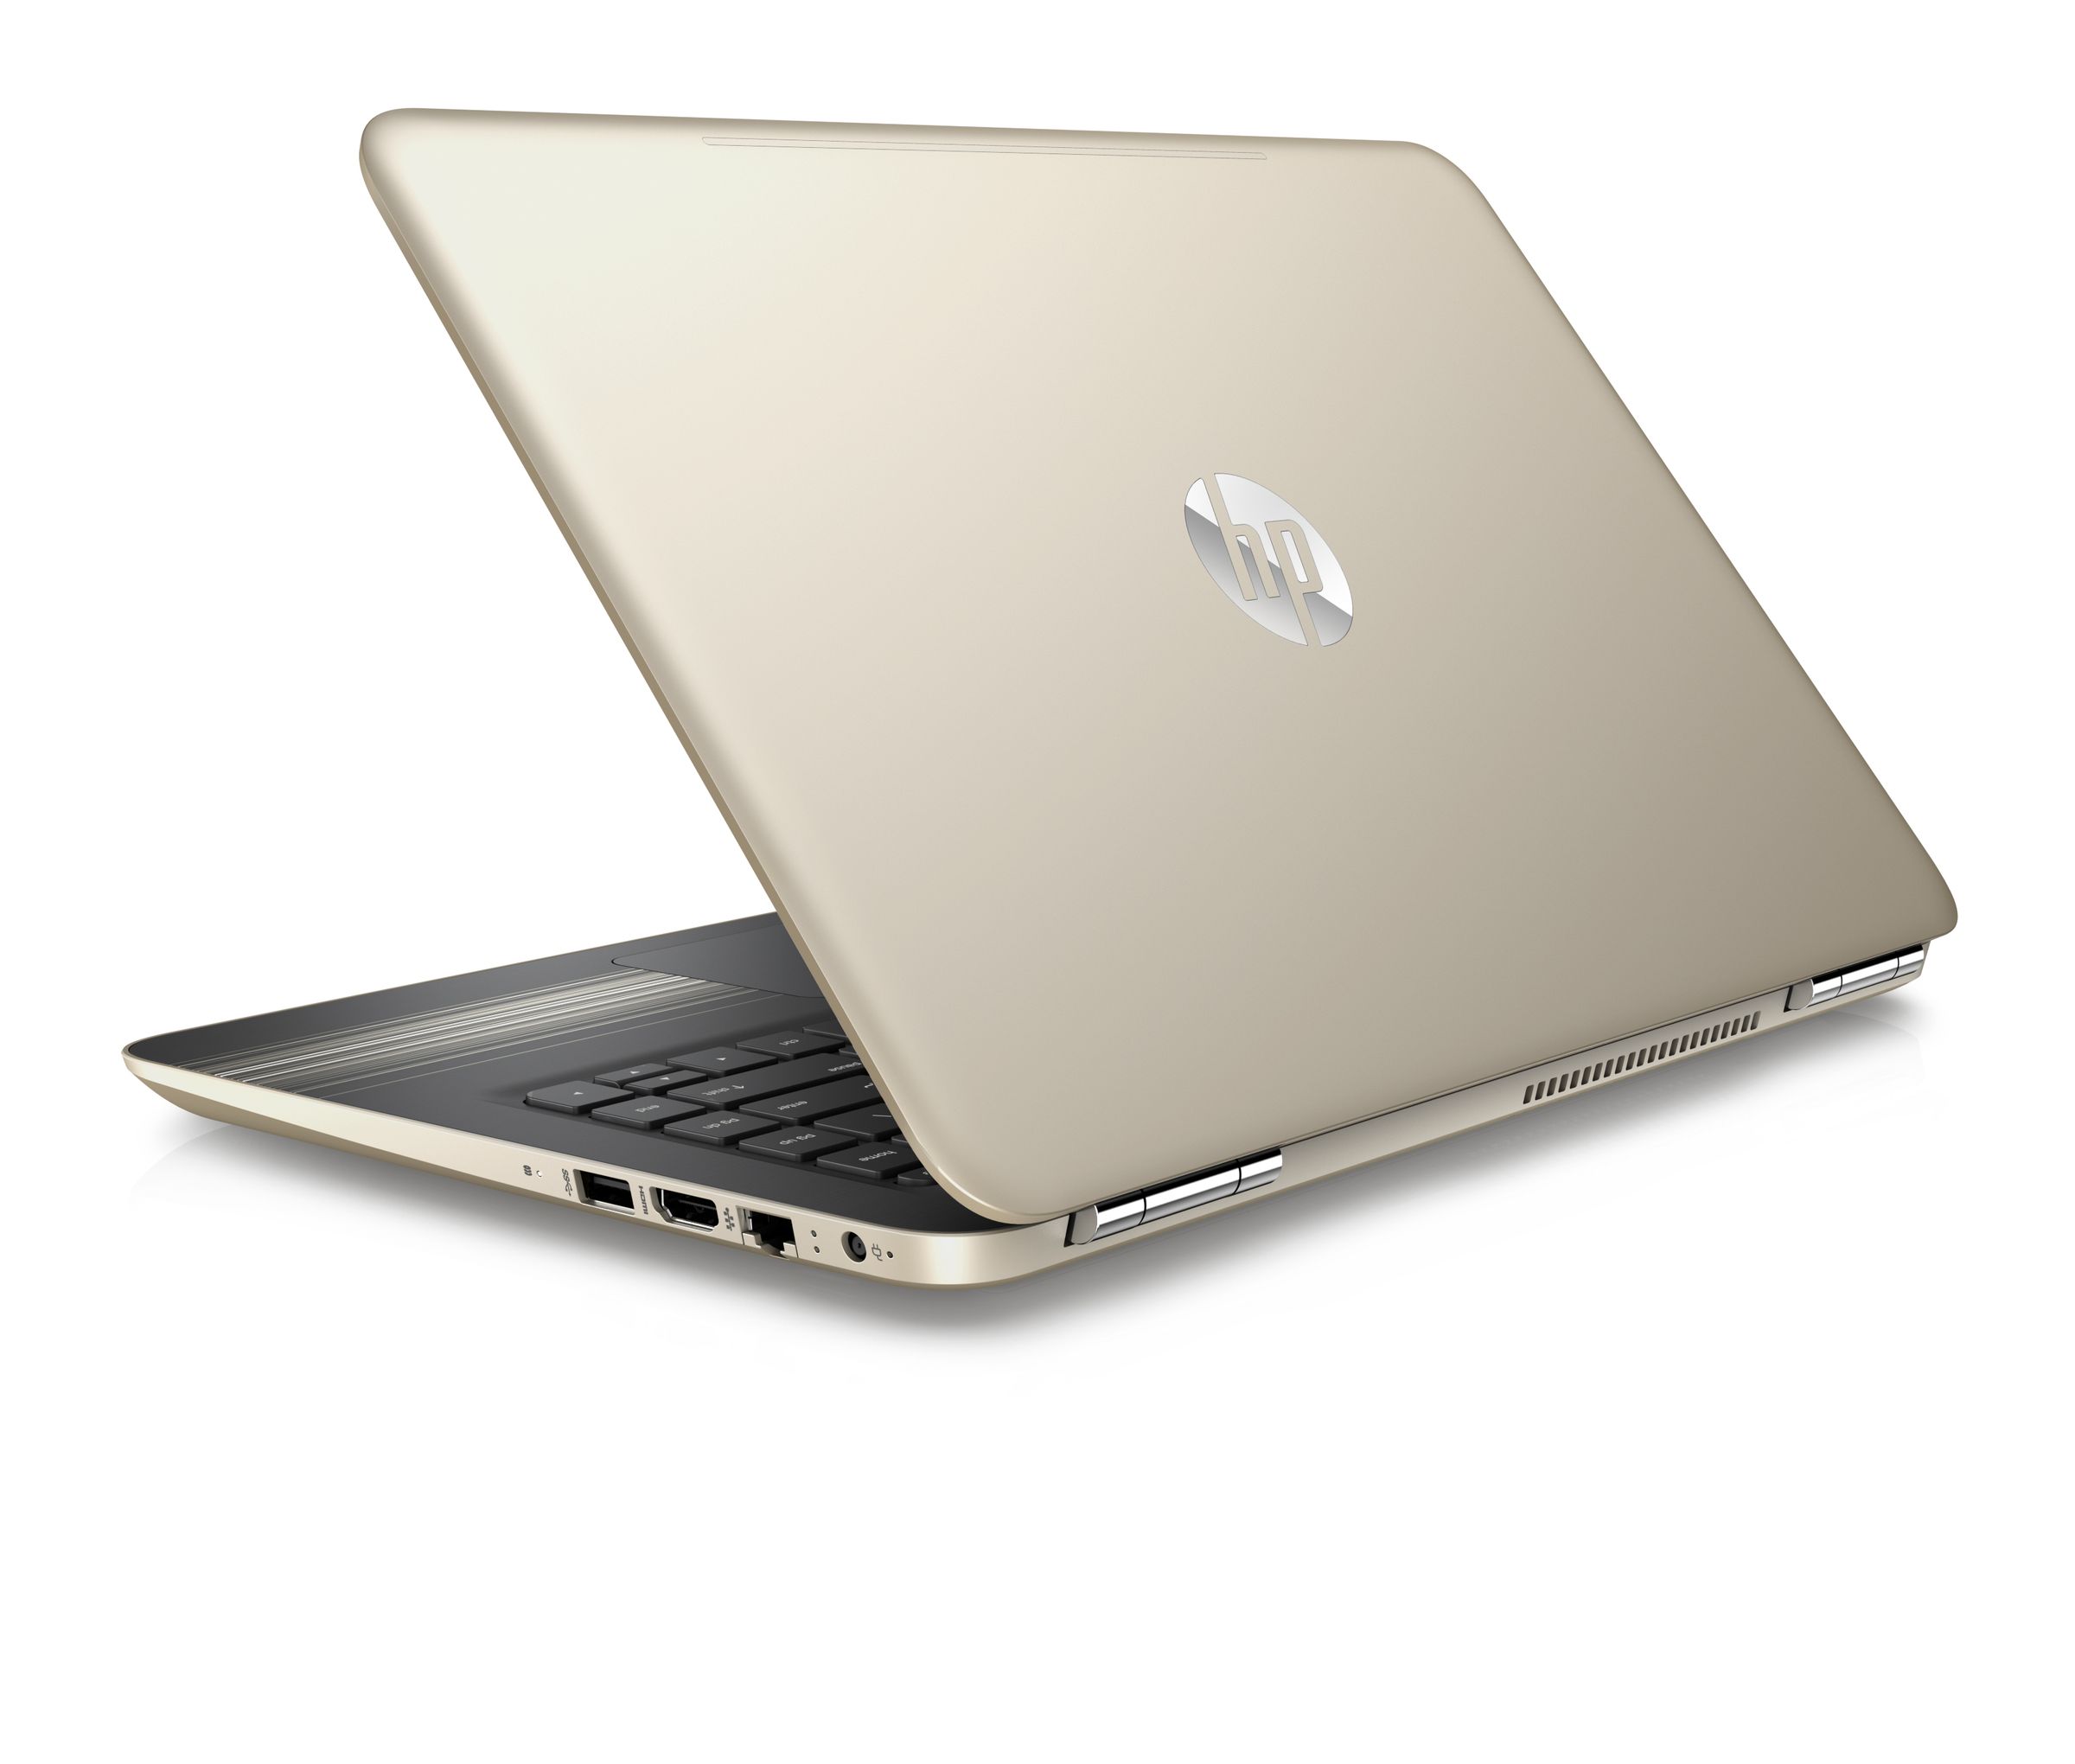 HP's Pavilion laptops now come in five colors